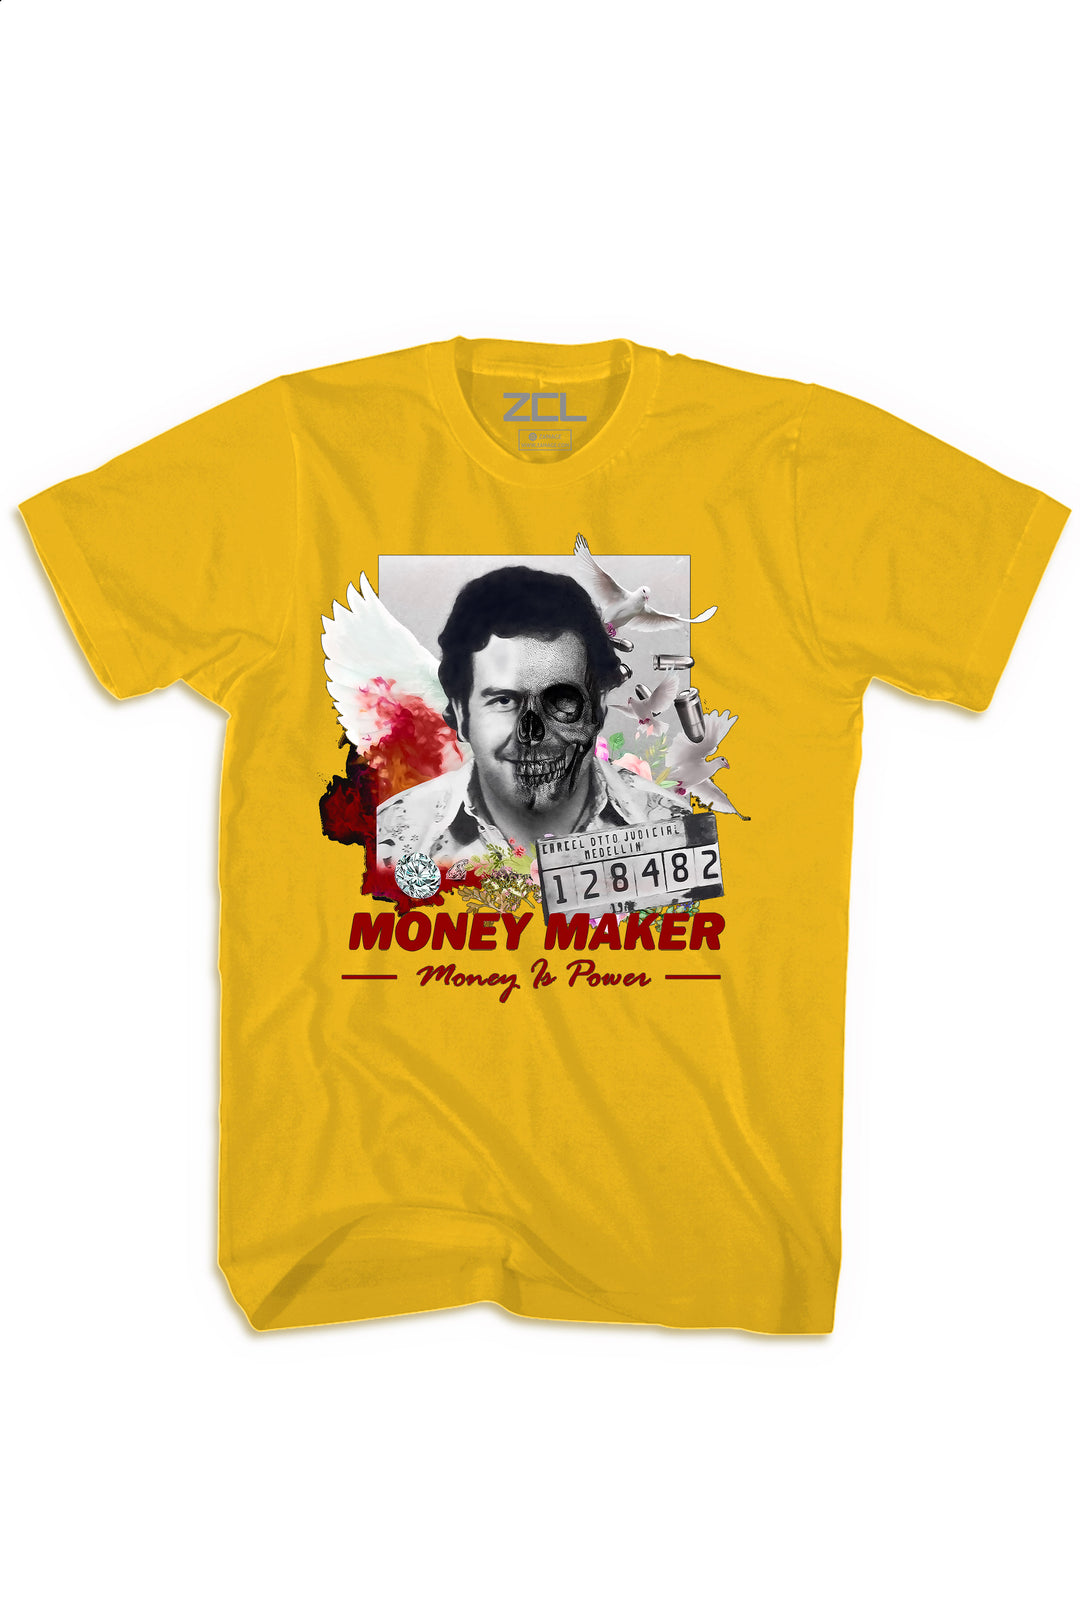 Official Money Maker Tee (Multi Color Logo) Limited - Zamage